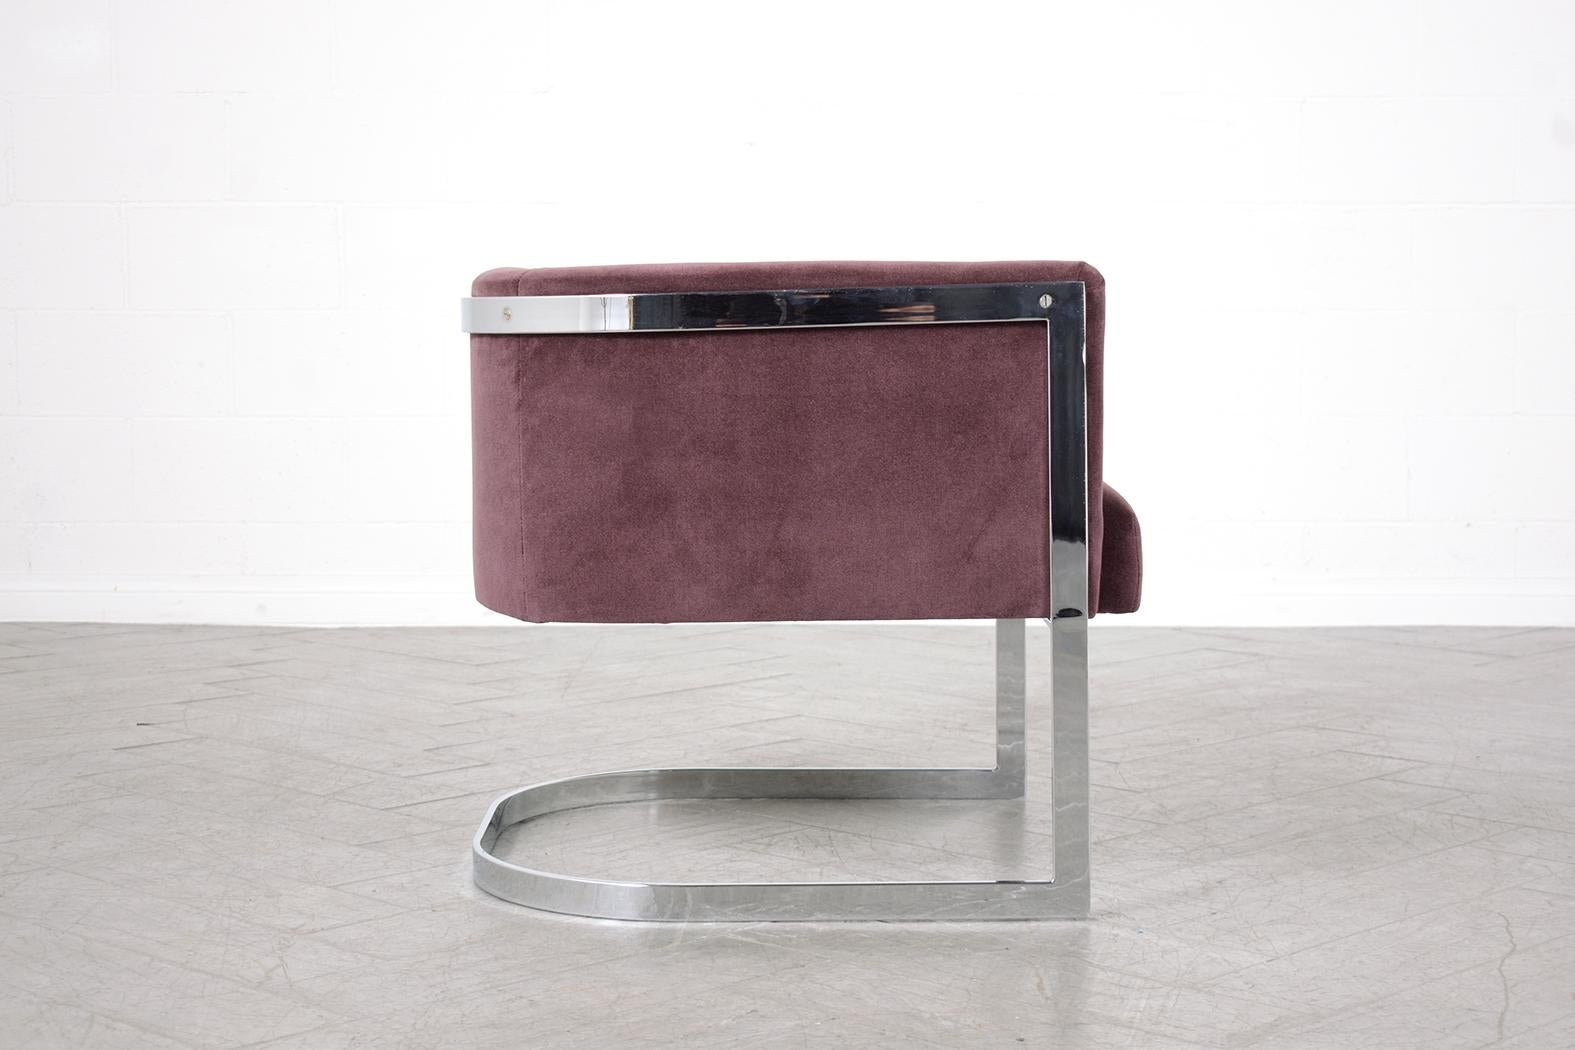 Late 20th Century 1970s Mid-Century Lounge Chair: Chrome Steel Frame & Purple Velvet Upholstery For Sale